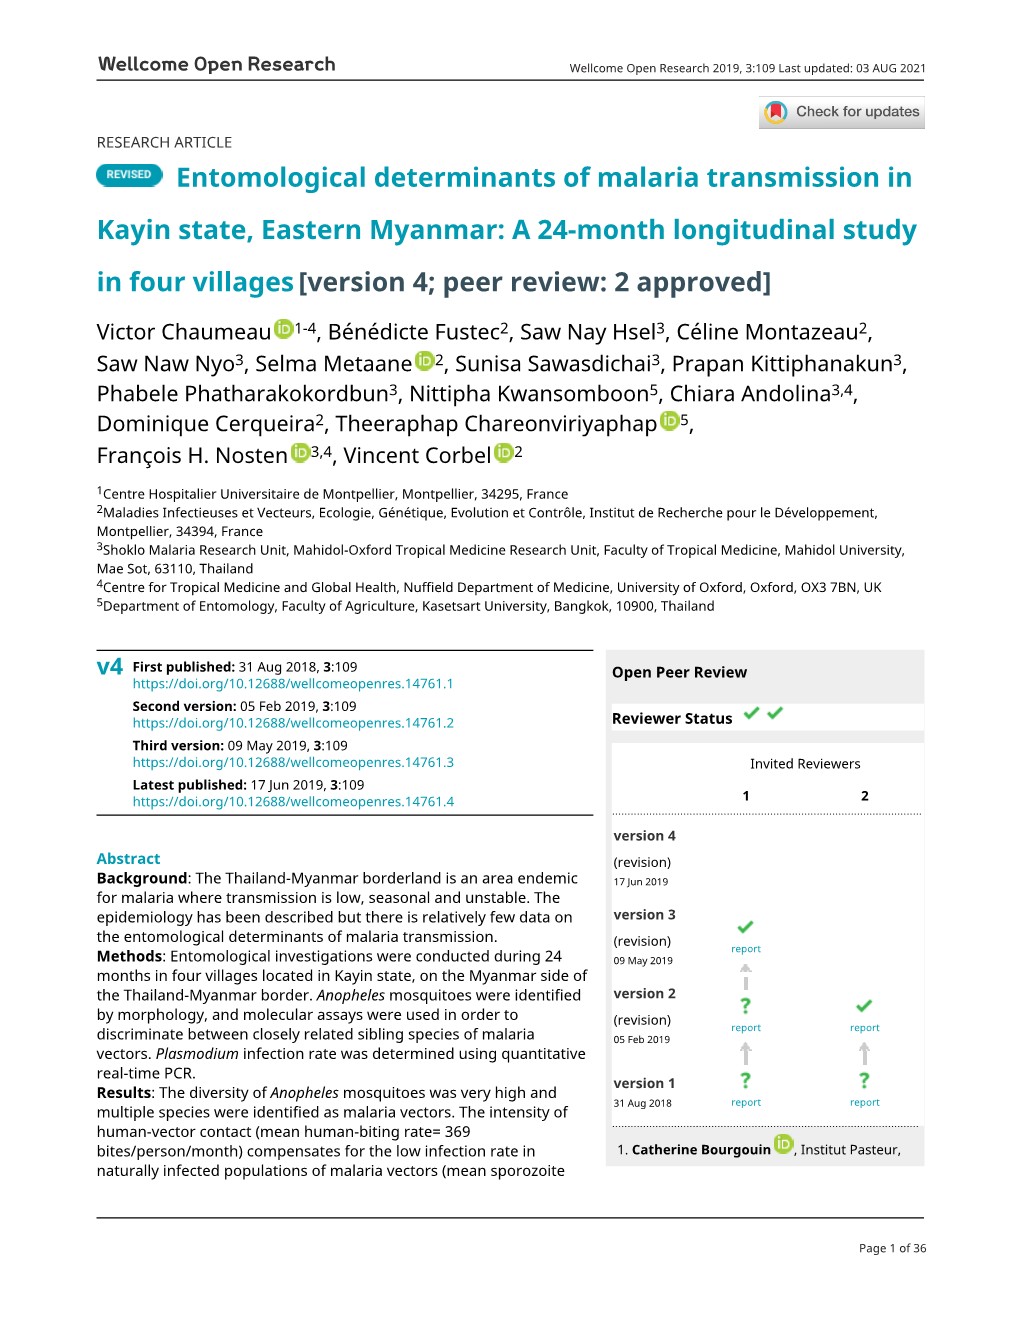 Entomological Determinants of Malaria